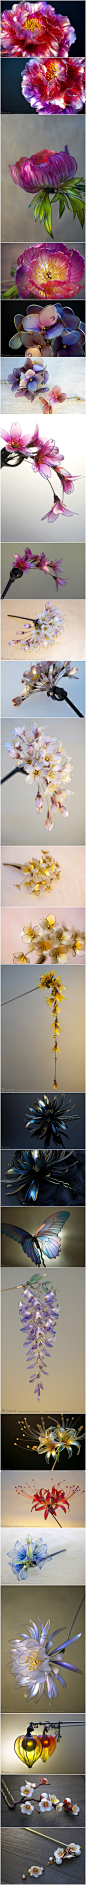 Kanzashi是一种日本传统发饰, 从日本Jōmon时代就开始广泛使用, 在那个年代日本人迷信这个发饰有神秘力量, 可以驱邪, 才华的艺术家Sakae, 将它做成蝴蝶和鲜花, 精致手工让你享受一种朴素的奢华。
by大仓鼠阿云云的照片 - 微相册